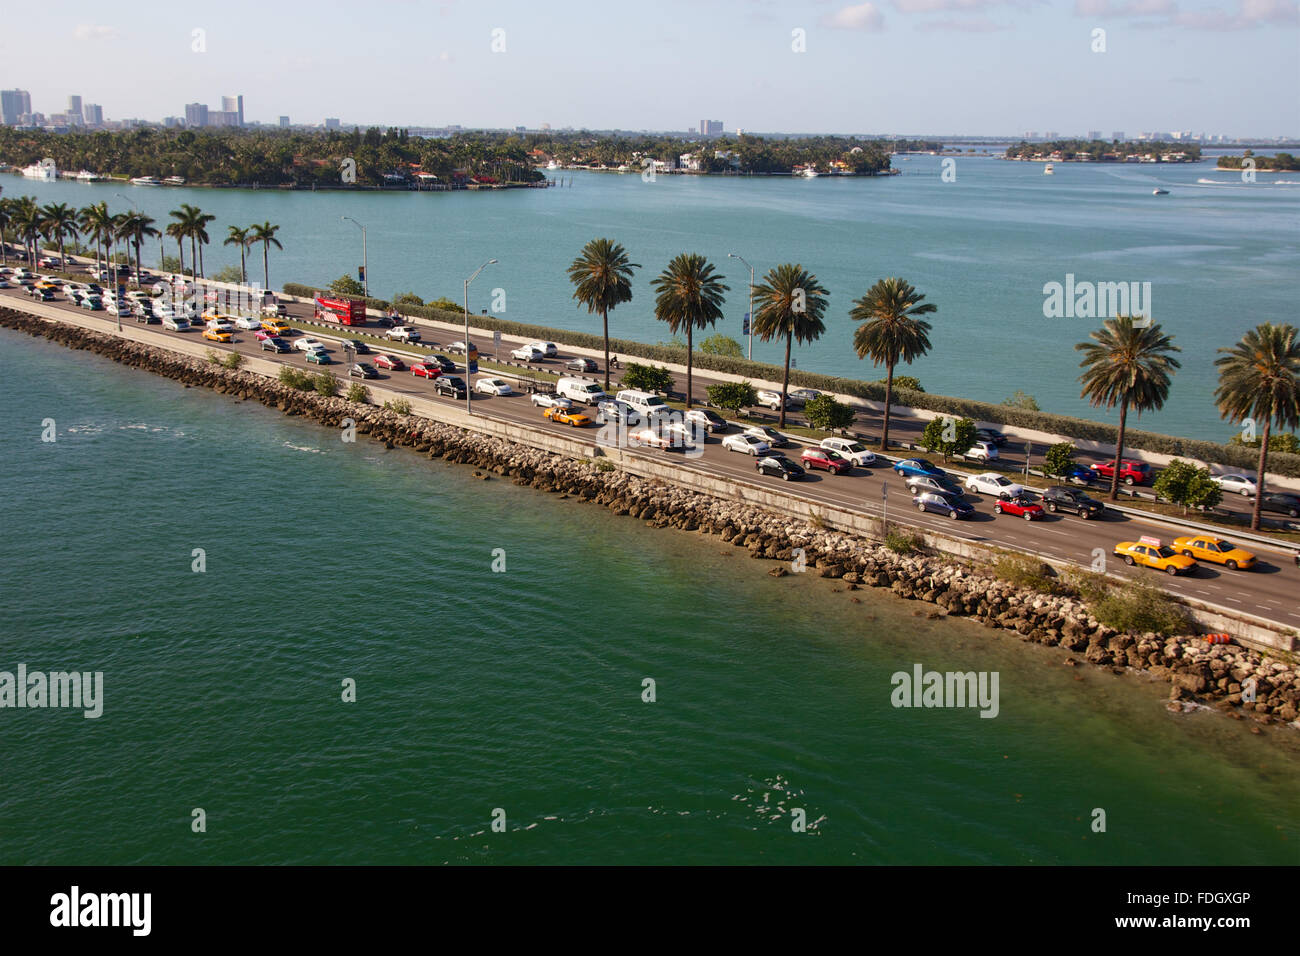 Traffic jam on a highway dam in Miami, FL, USA. Stock Photo